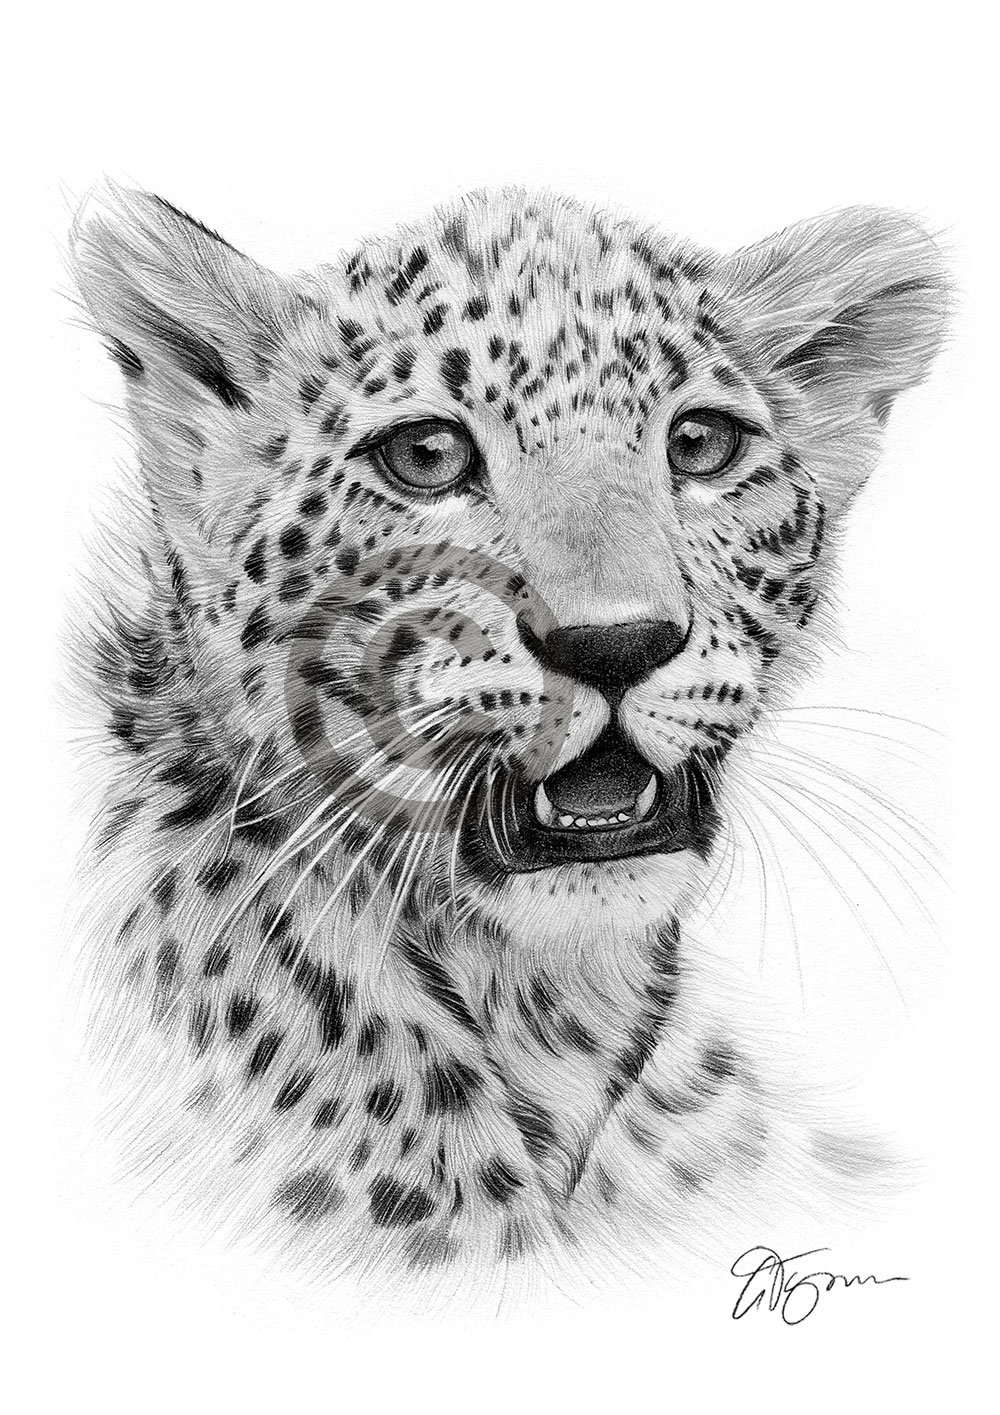 Pencil drawing of a cheetah cub by artist Gary Tymon